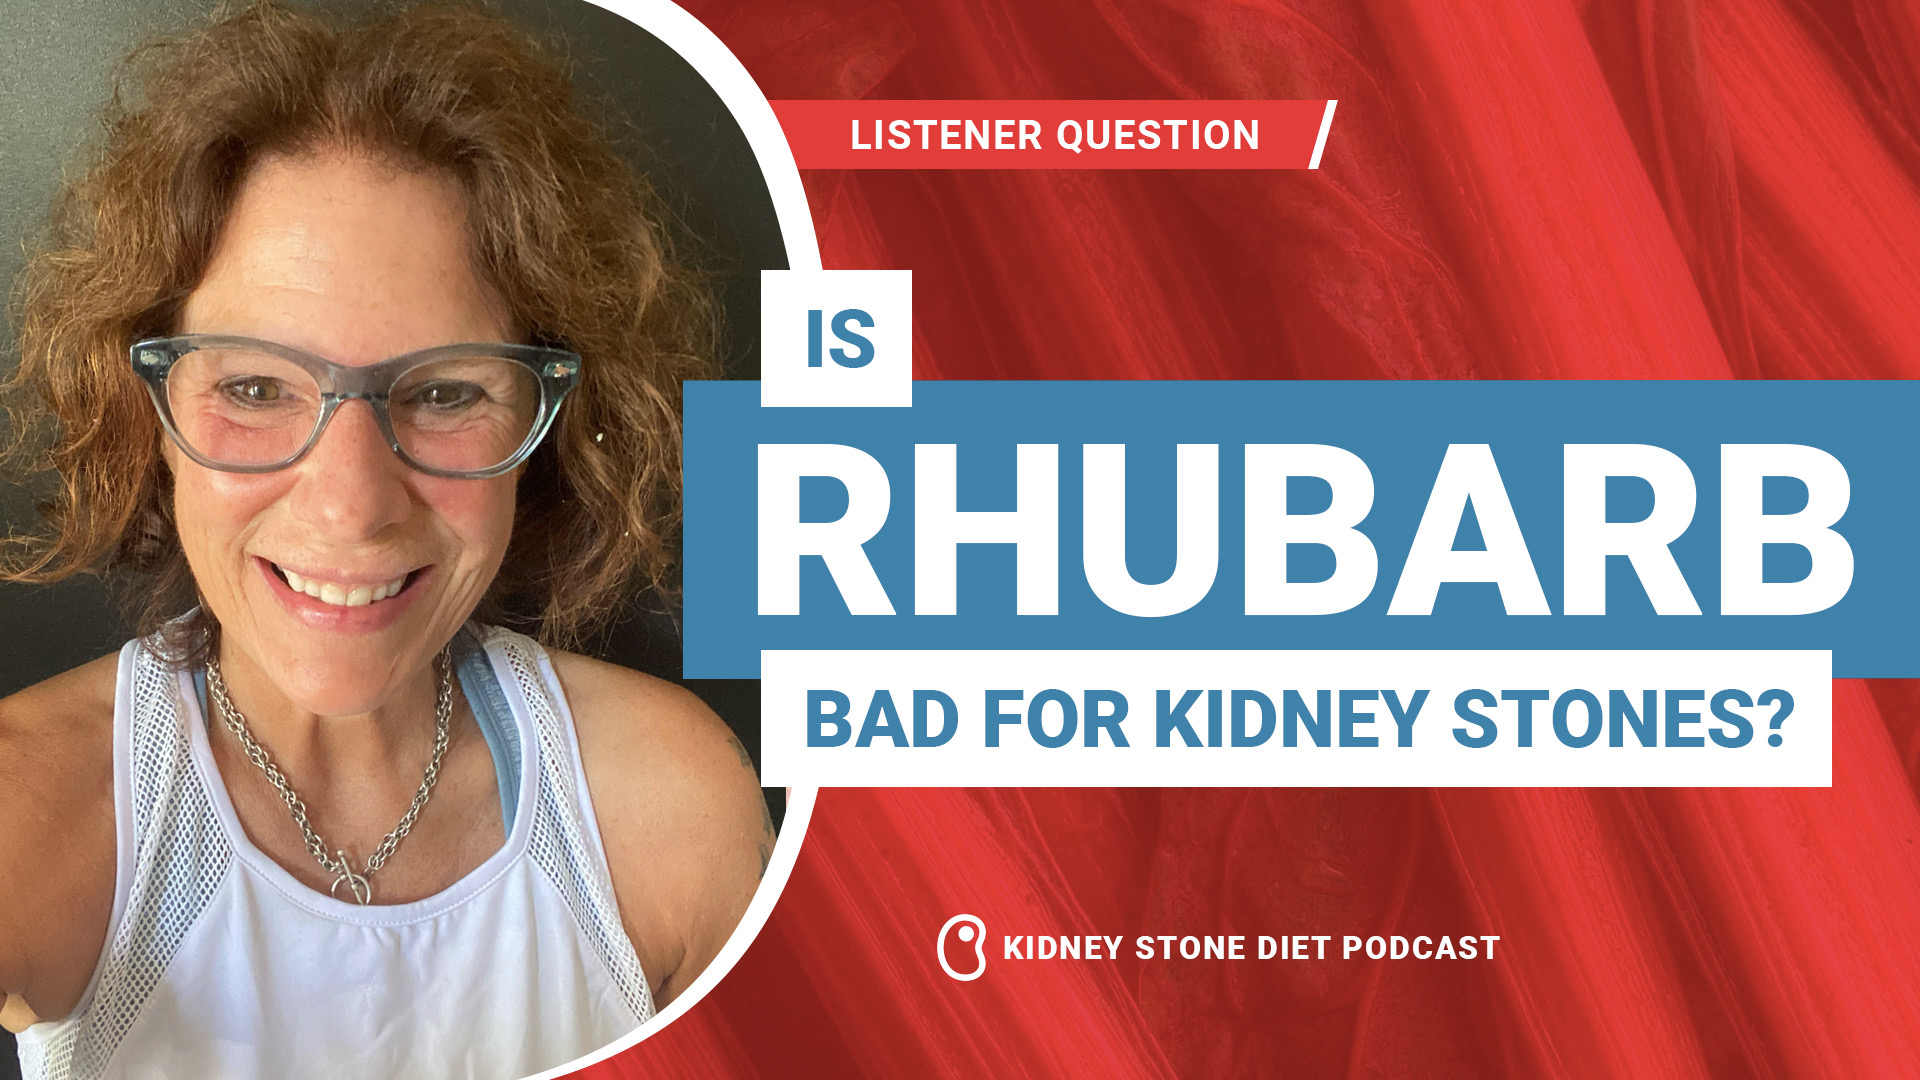 Is rhubarb bad for kidney stones?